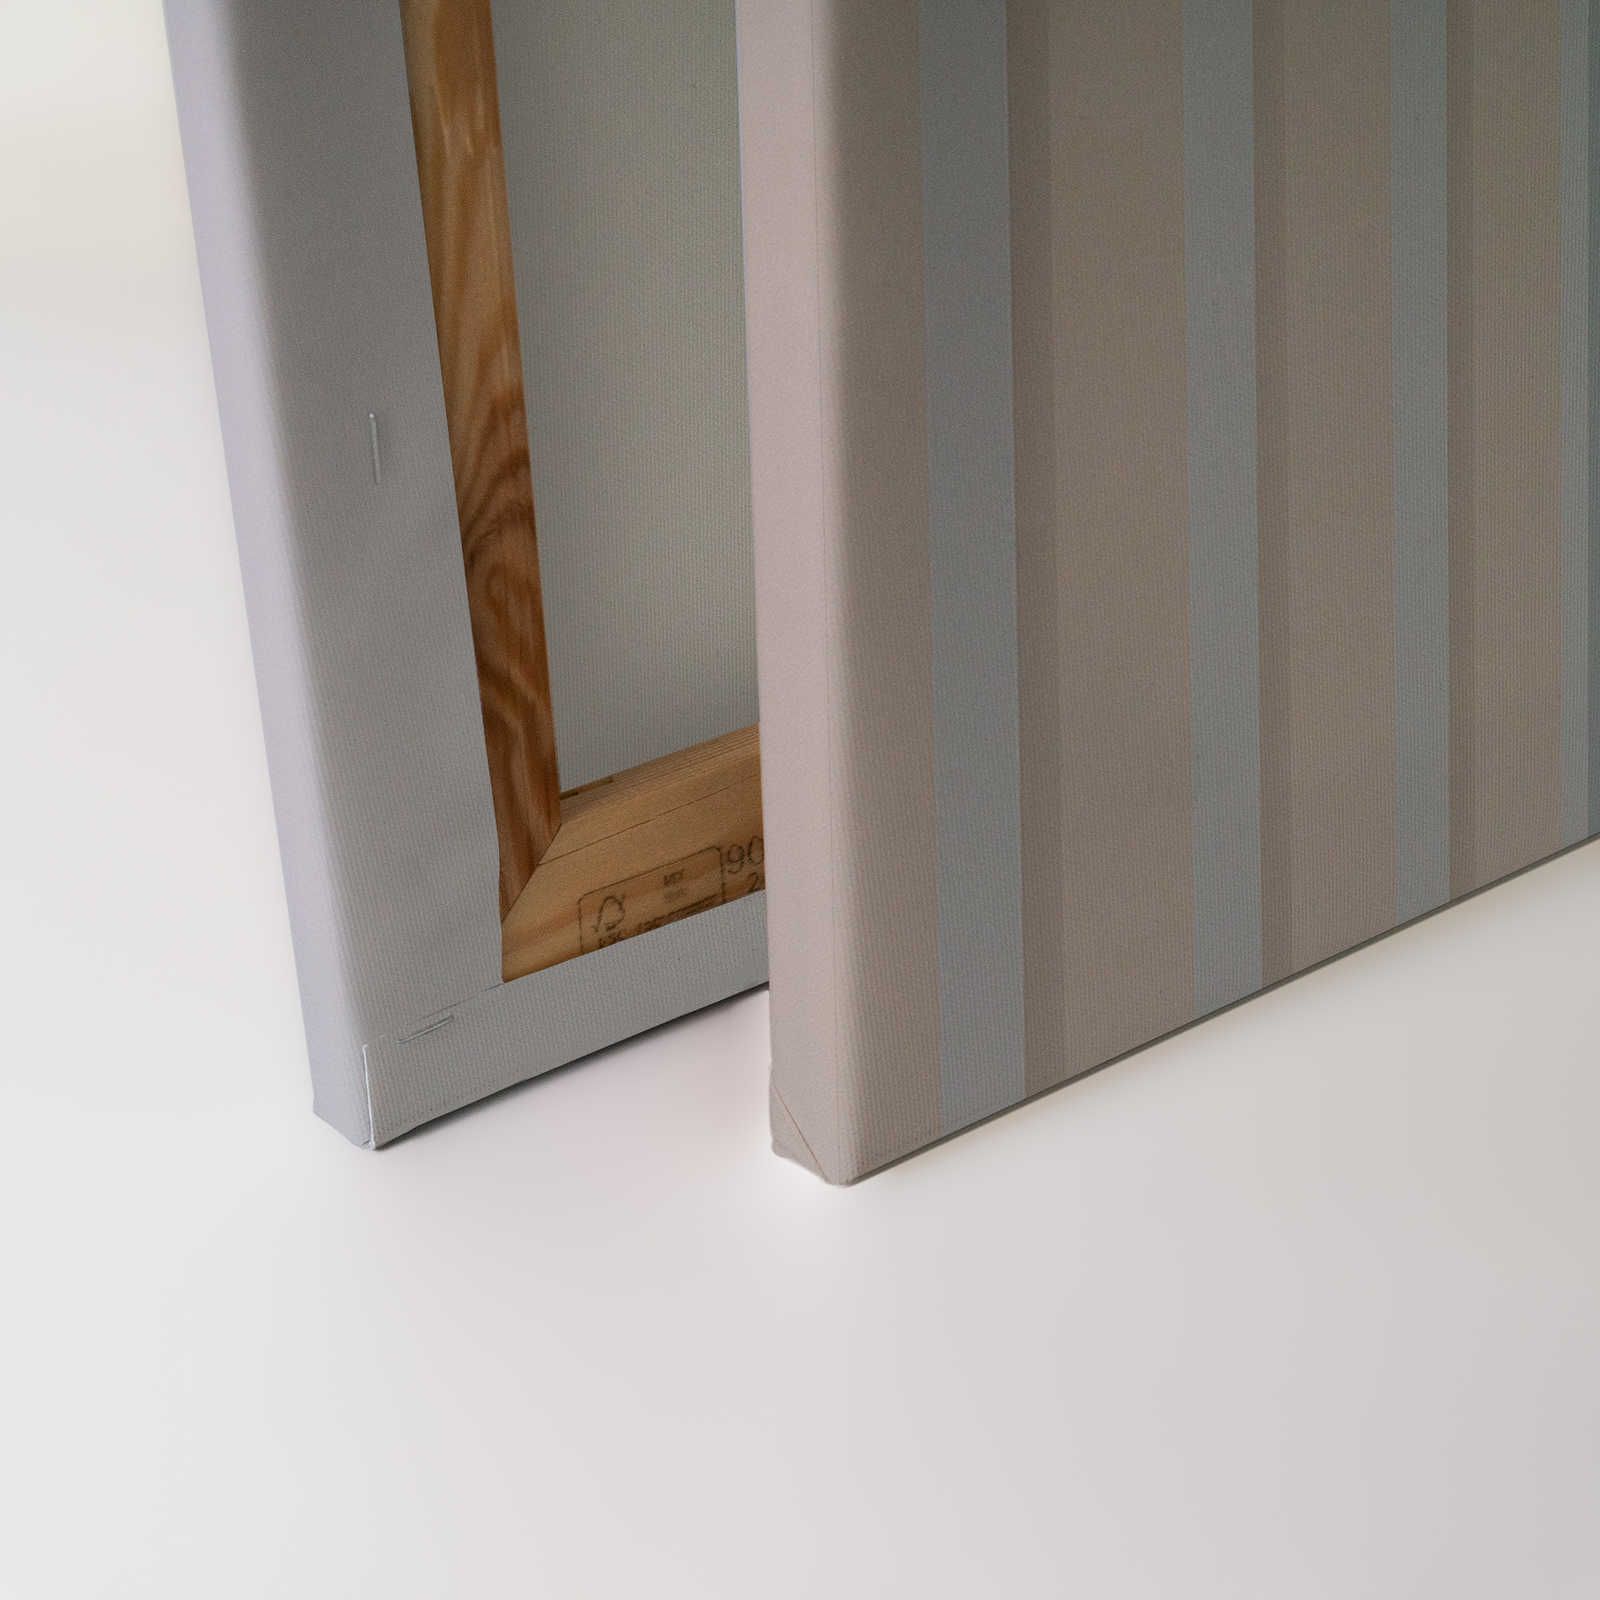             Illusion Room 2 - Leinwandbild 3D Streifen Design in Blau & Grau – 0,90 m x 0,60 m
        